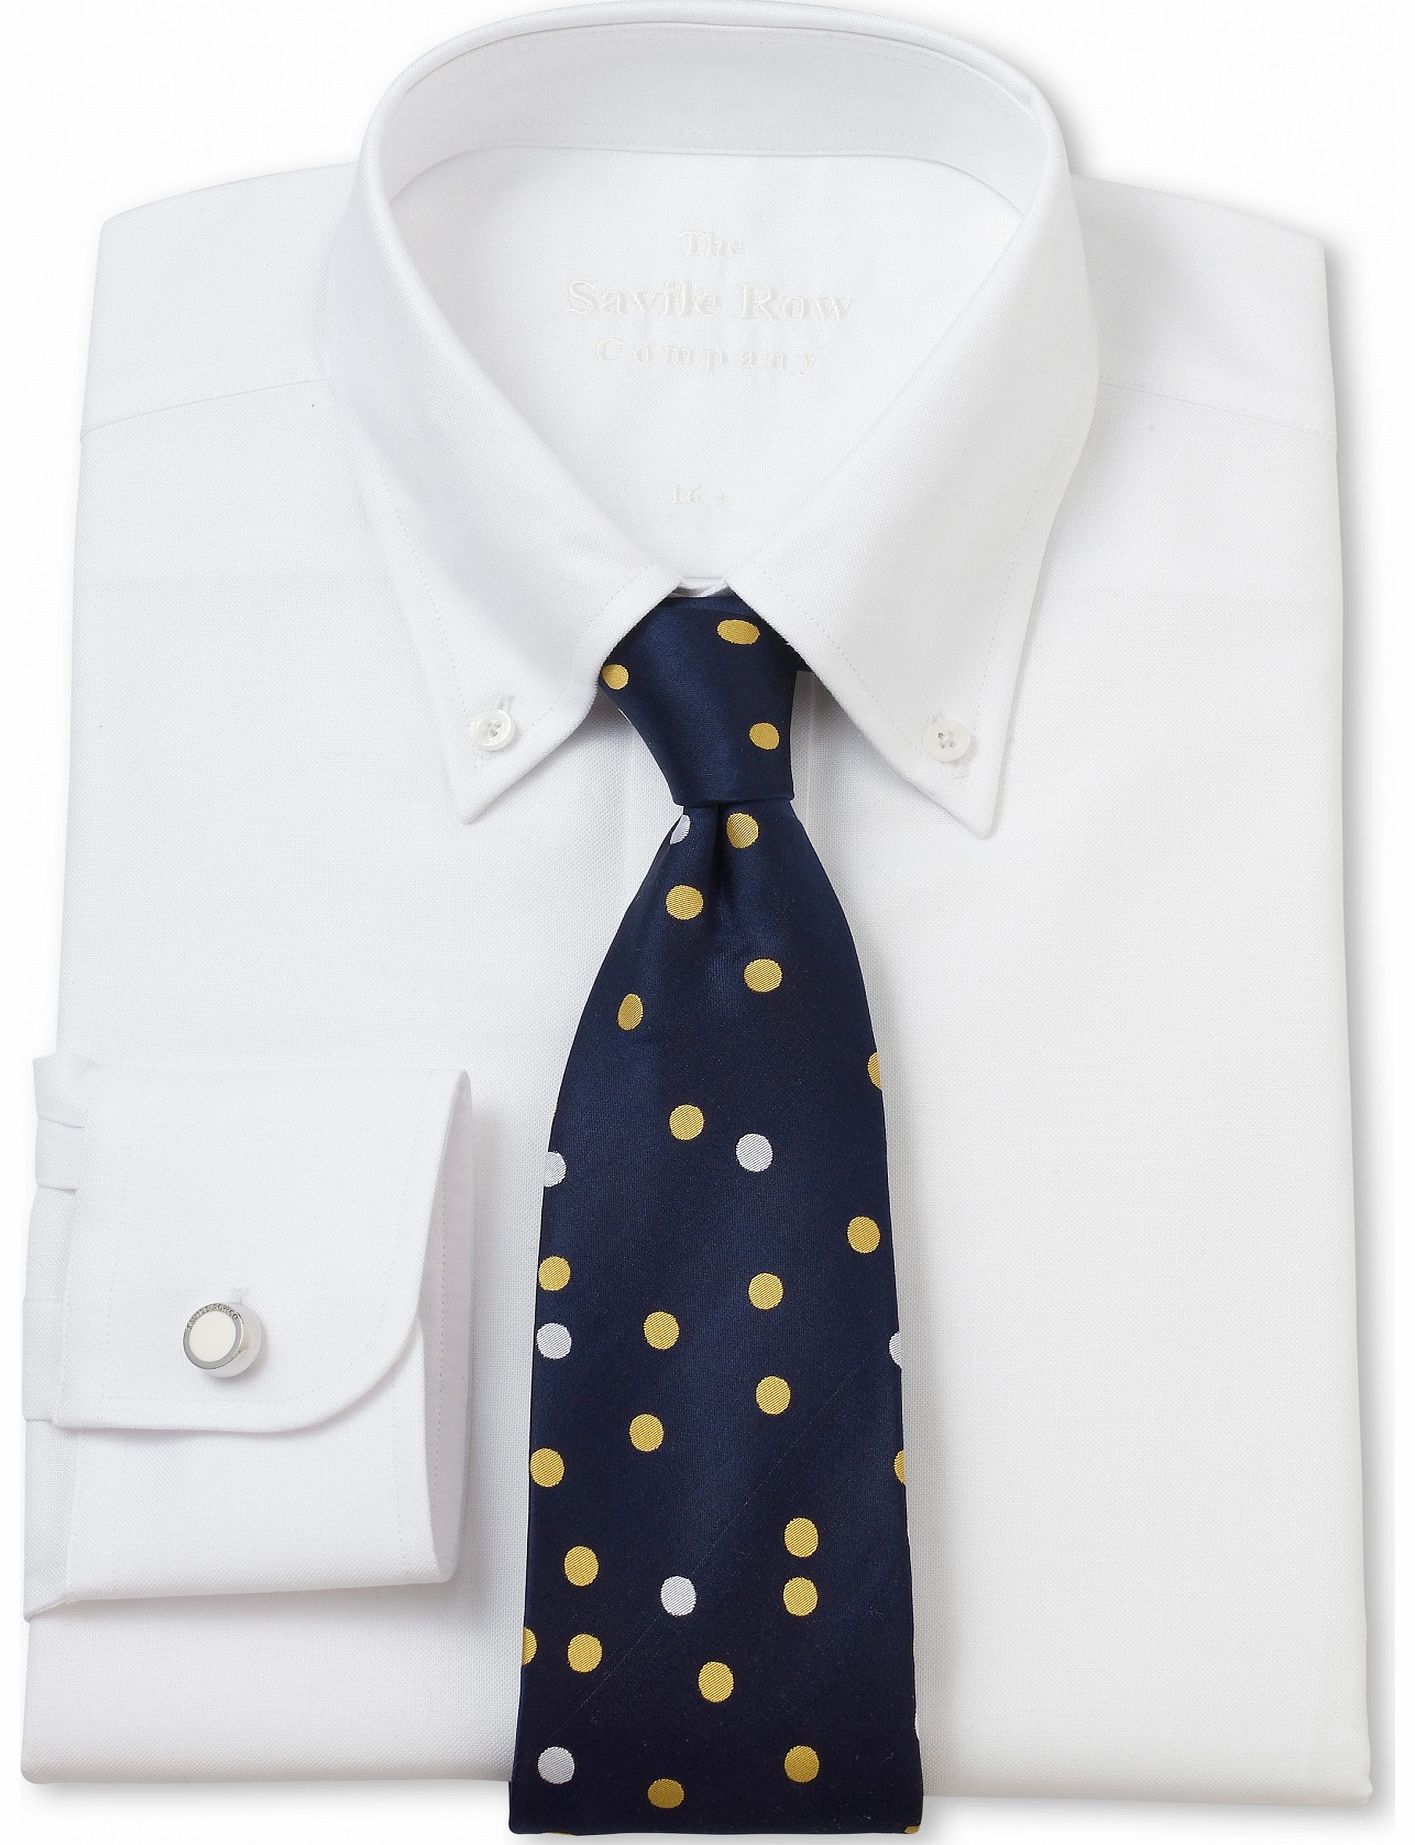 Savile Row Company White Oxford Button Down Slim Fit Shirt 15 1/2``